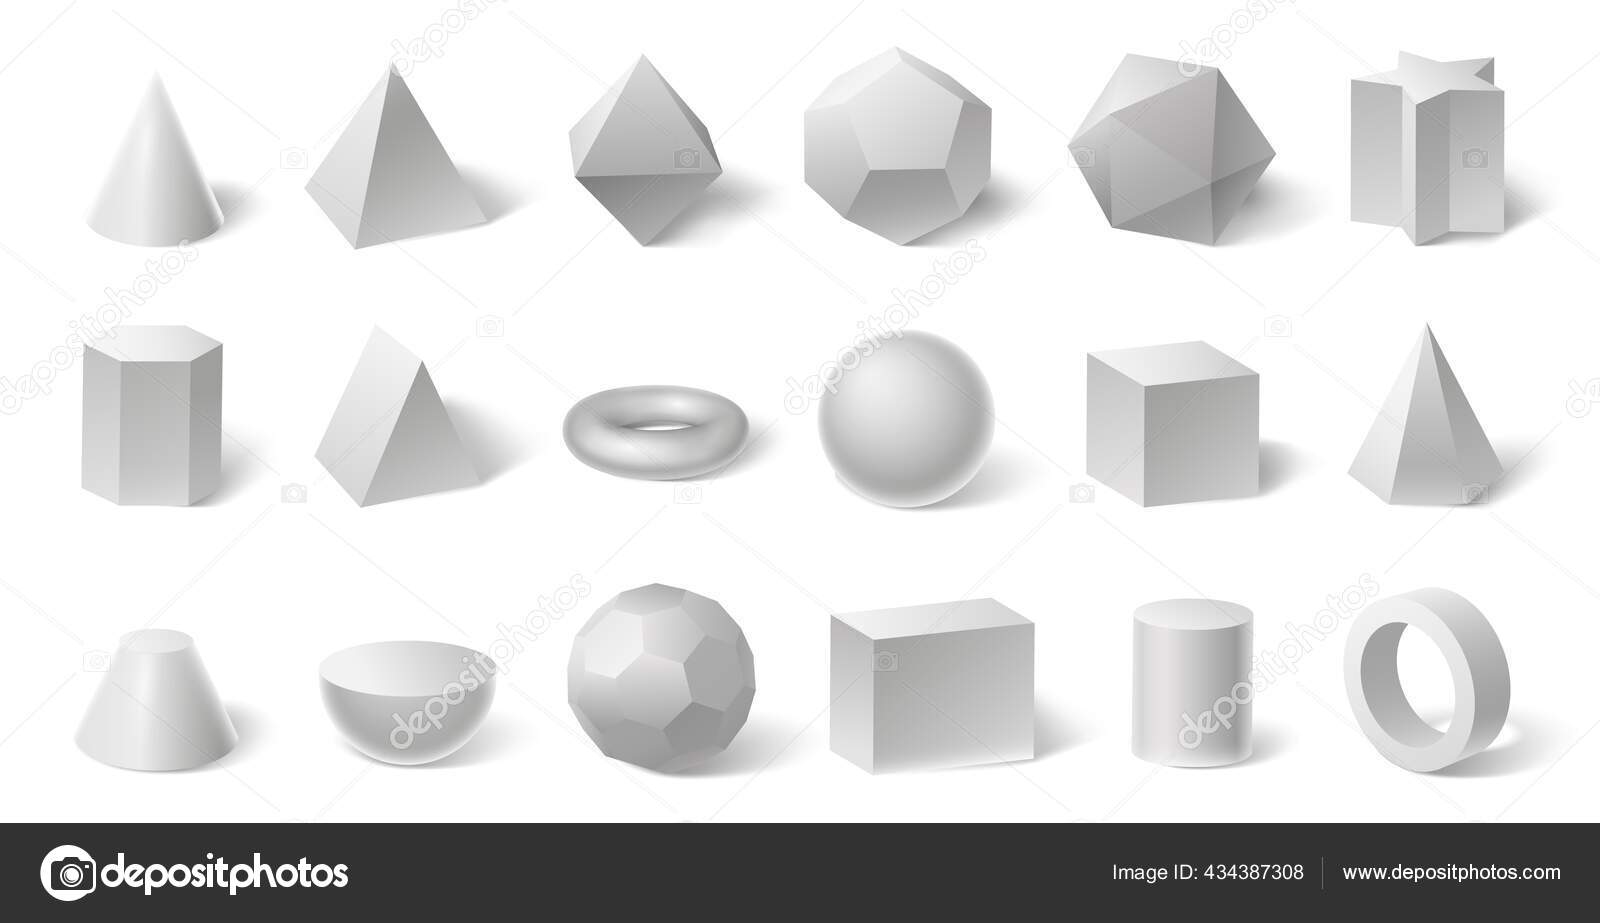 Geometric 3d shapes. Realistic white basic geometry form sphere